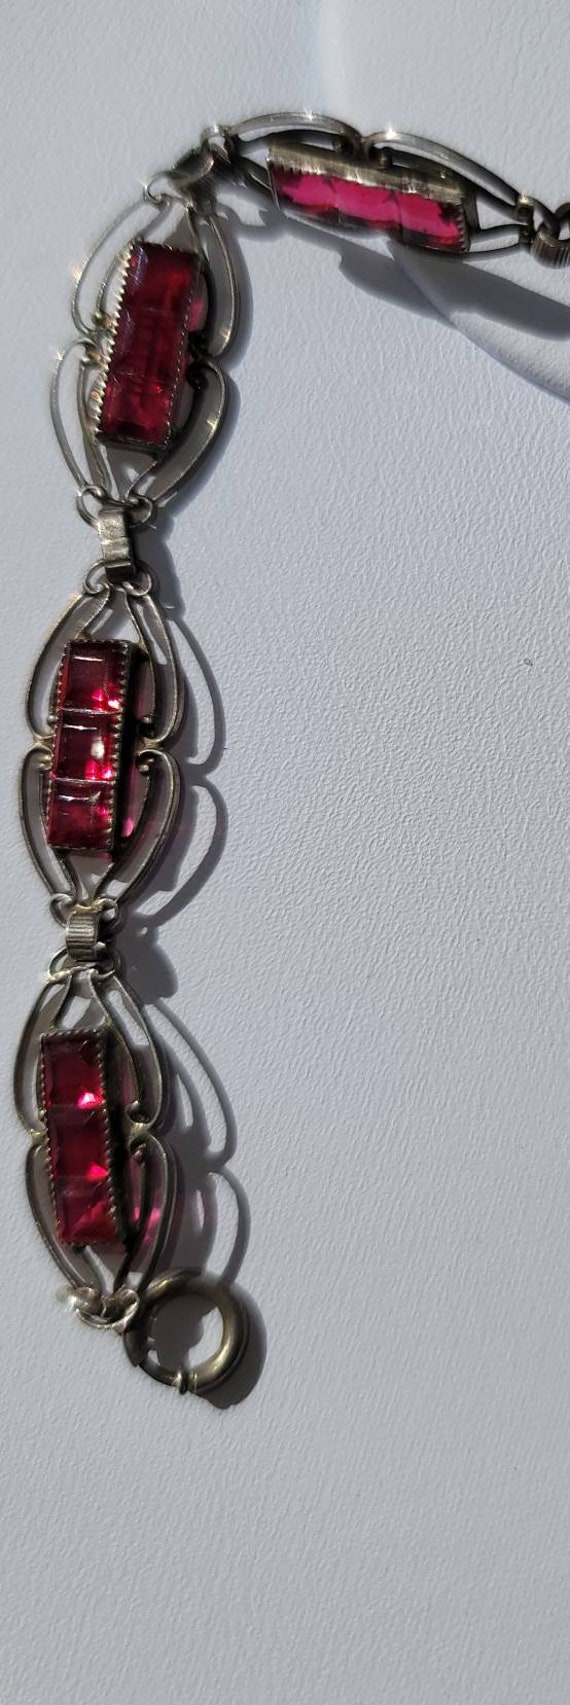 Vintage Silver and Ruby Glass Bracelet - image 2